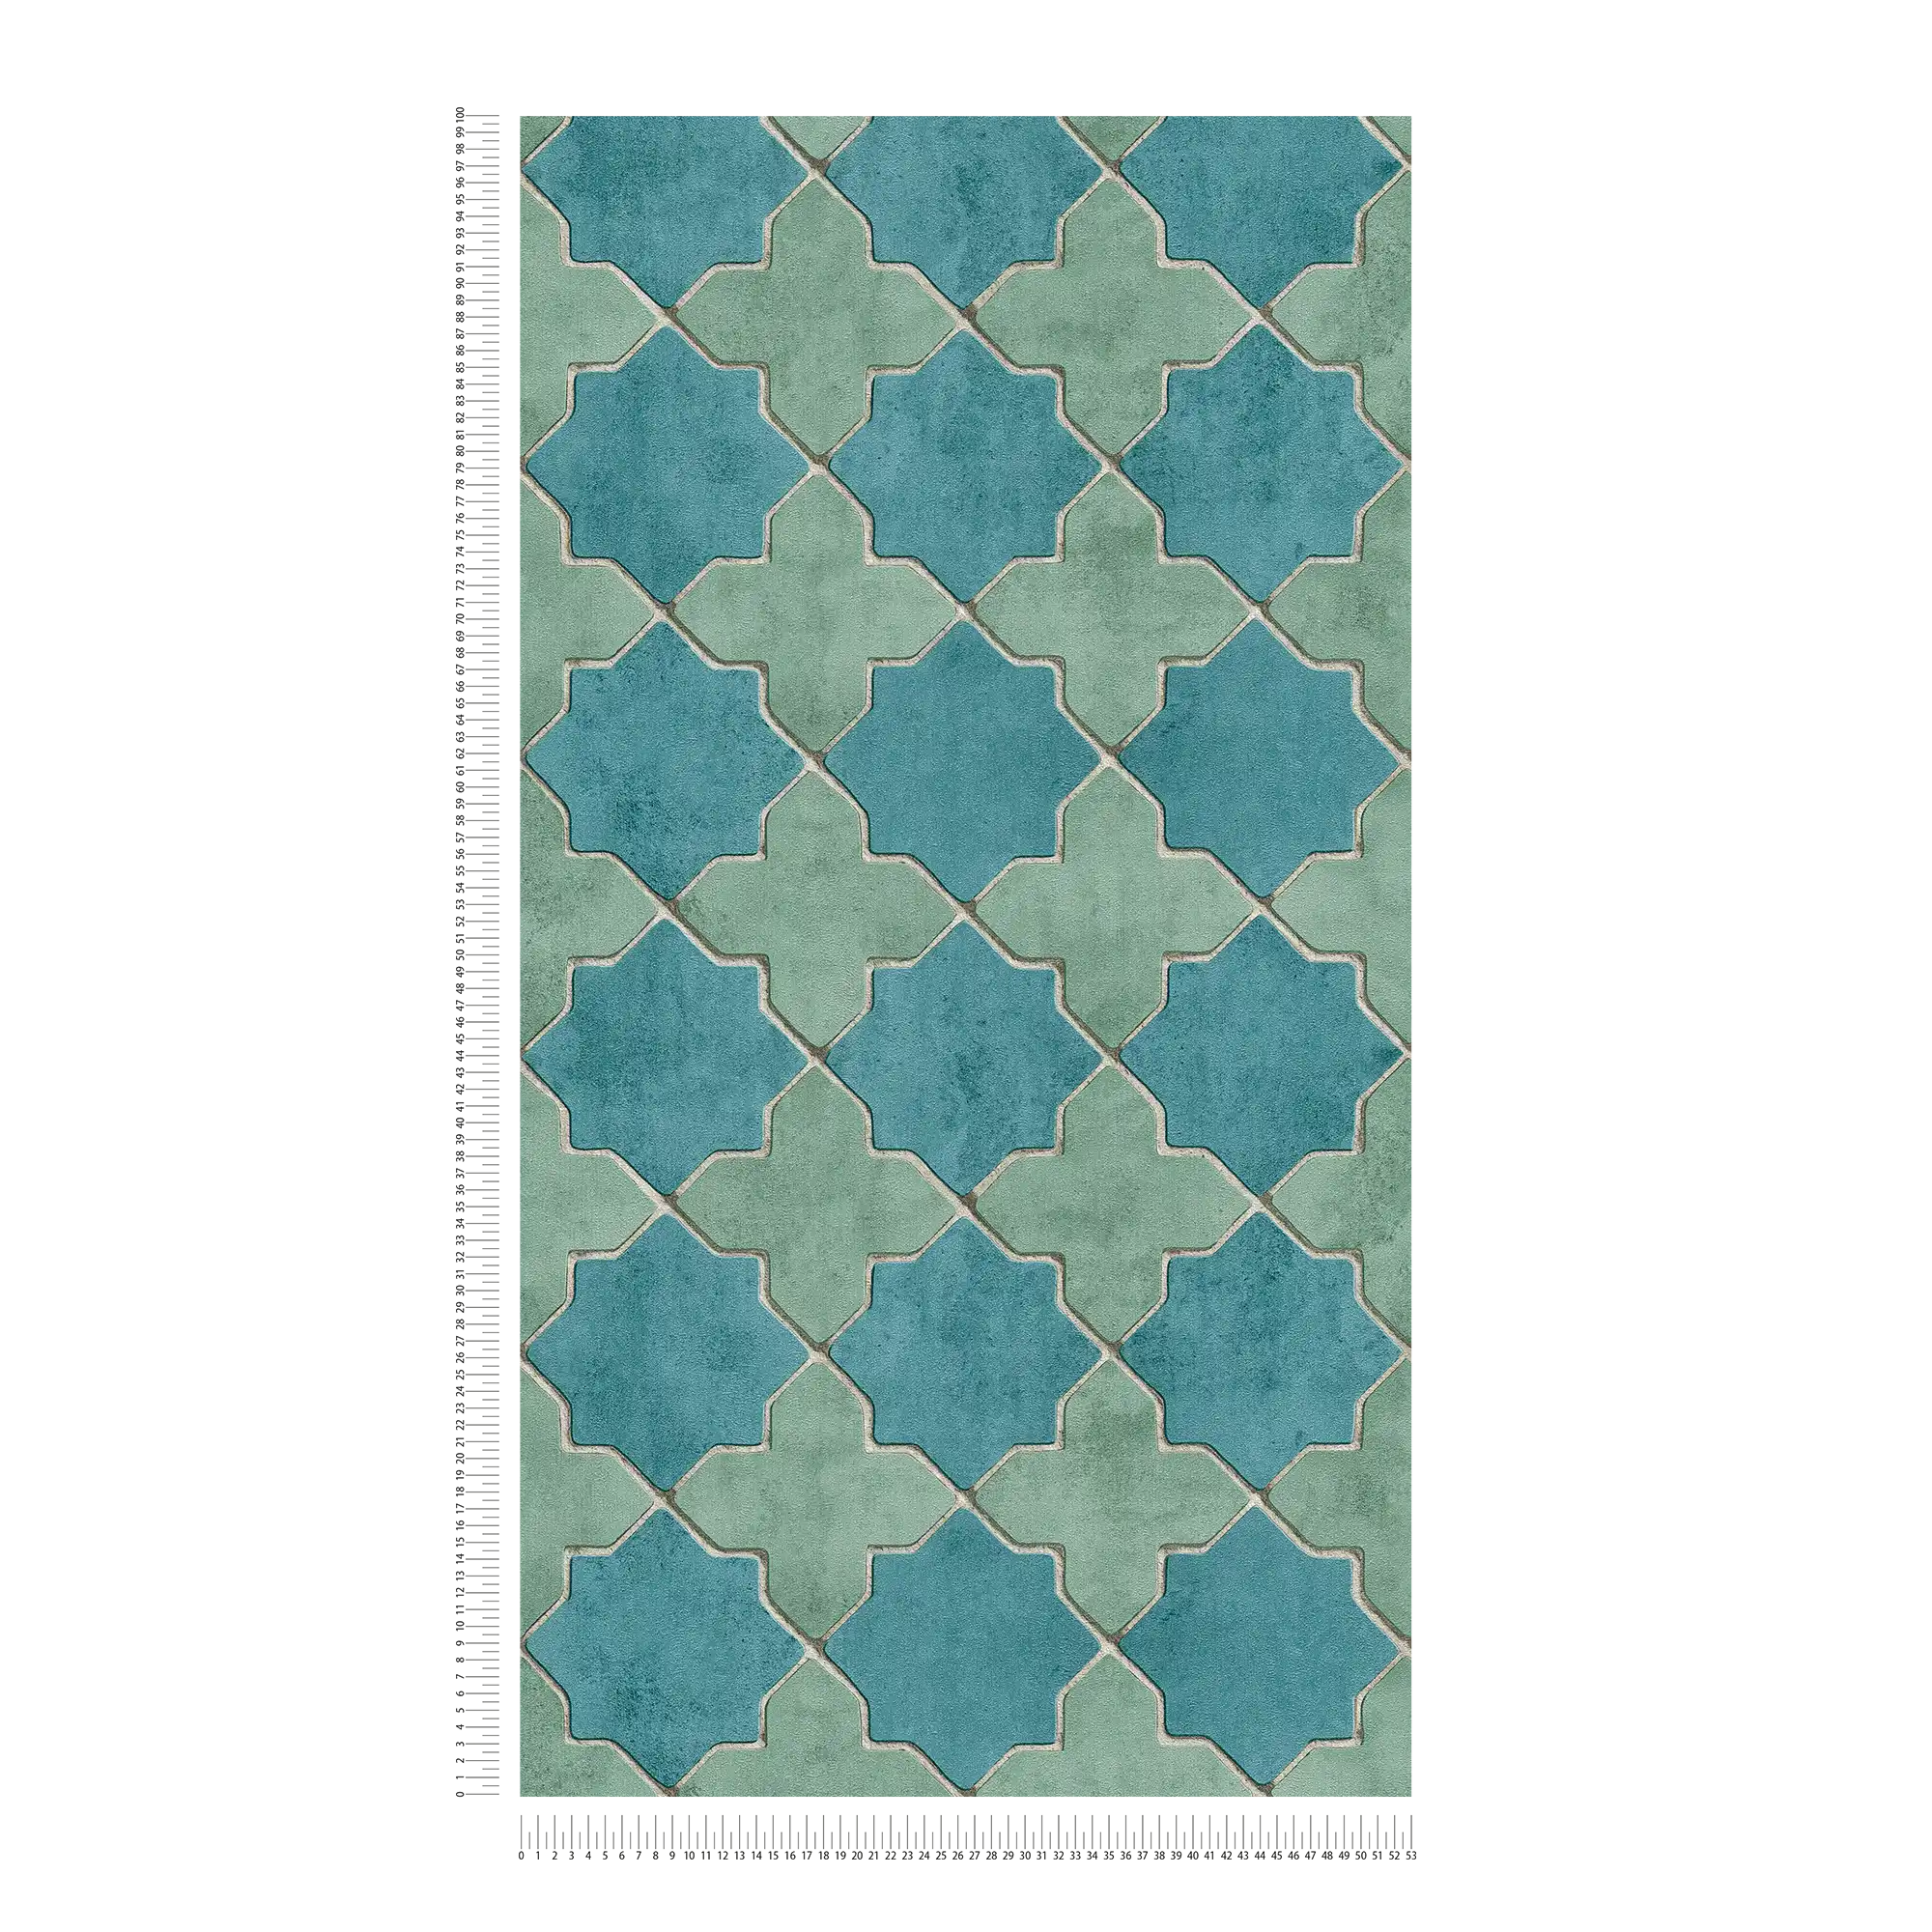             Tile wallpaper mosaic look - blue, green, beige
        